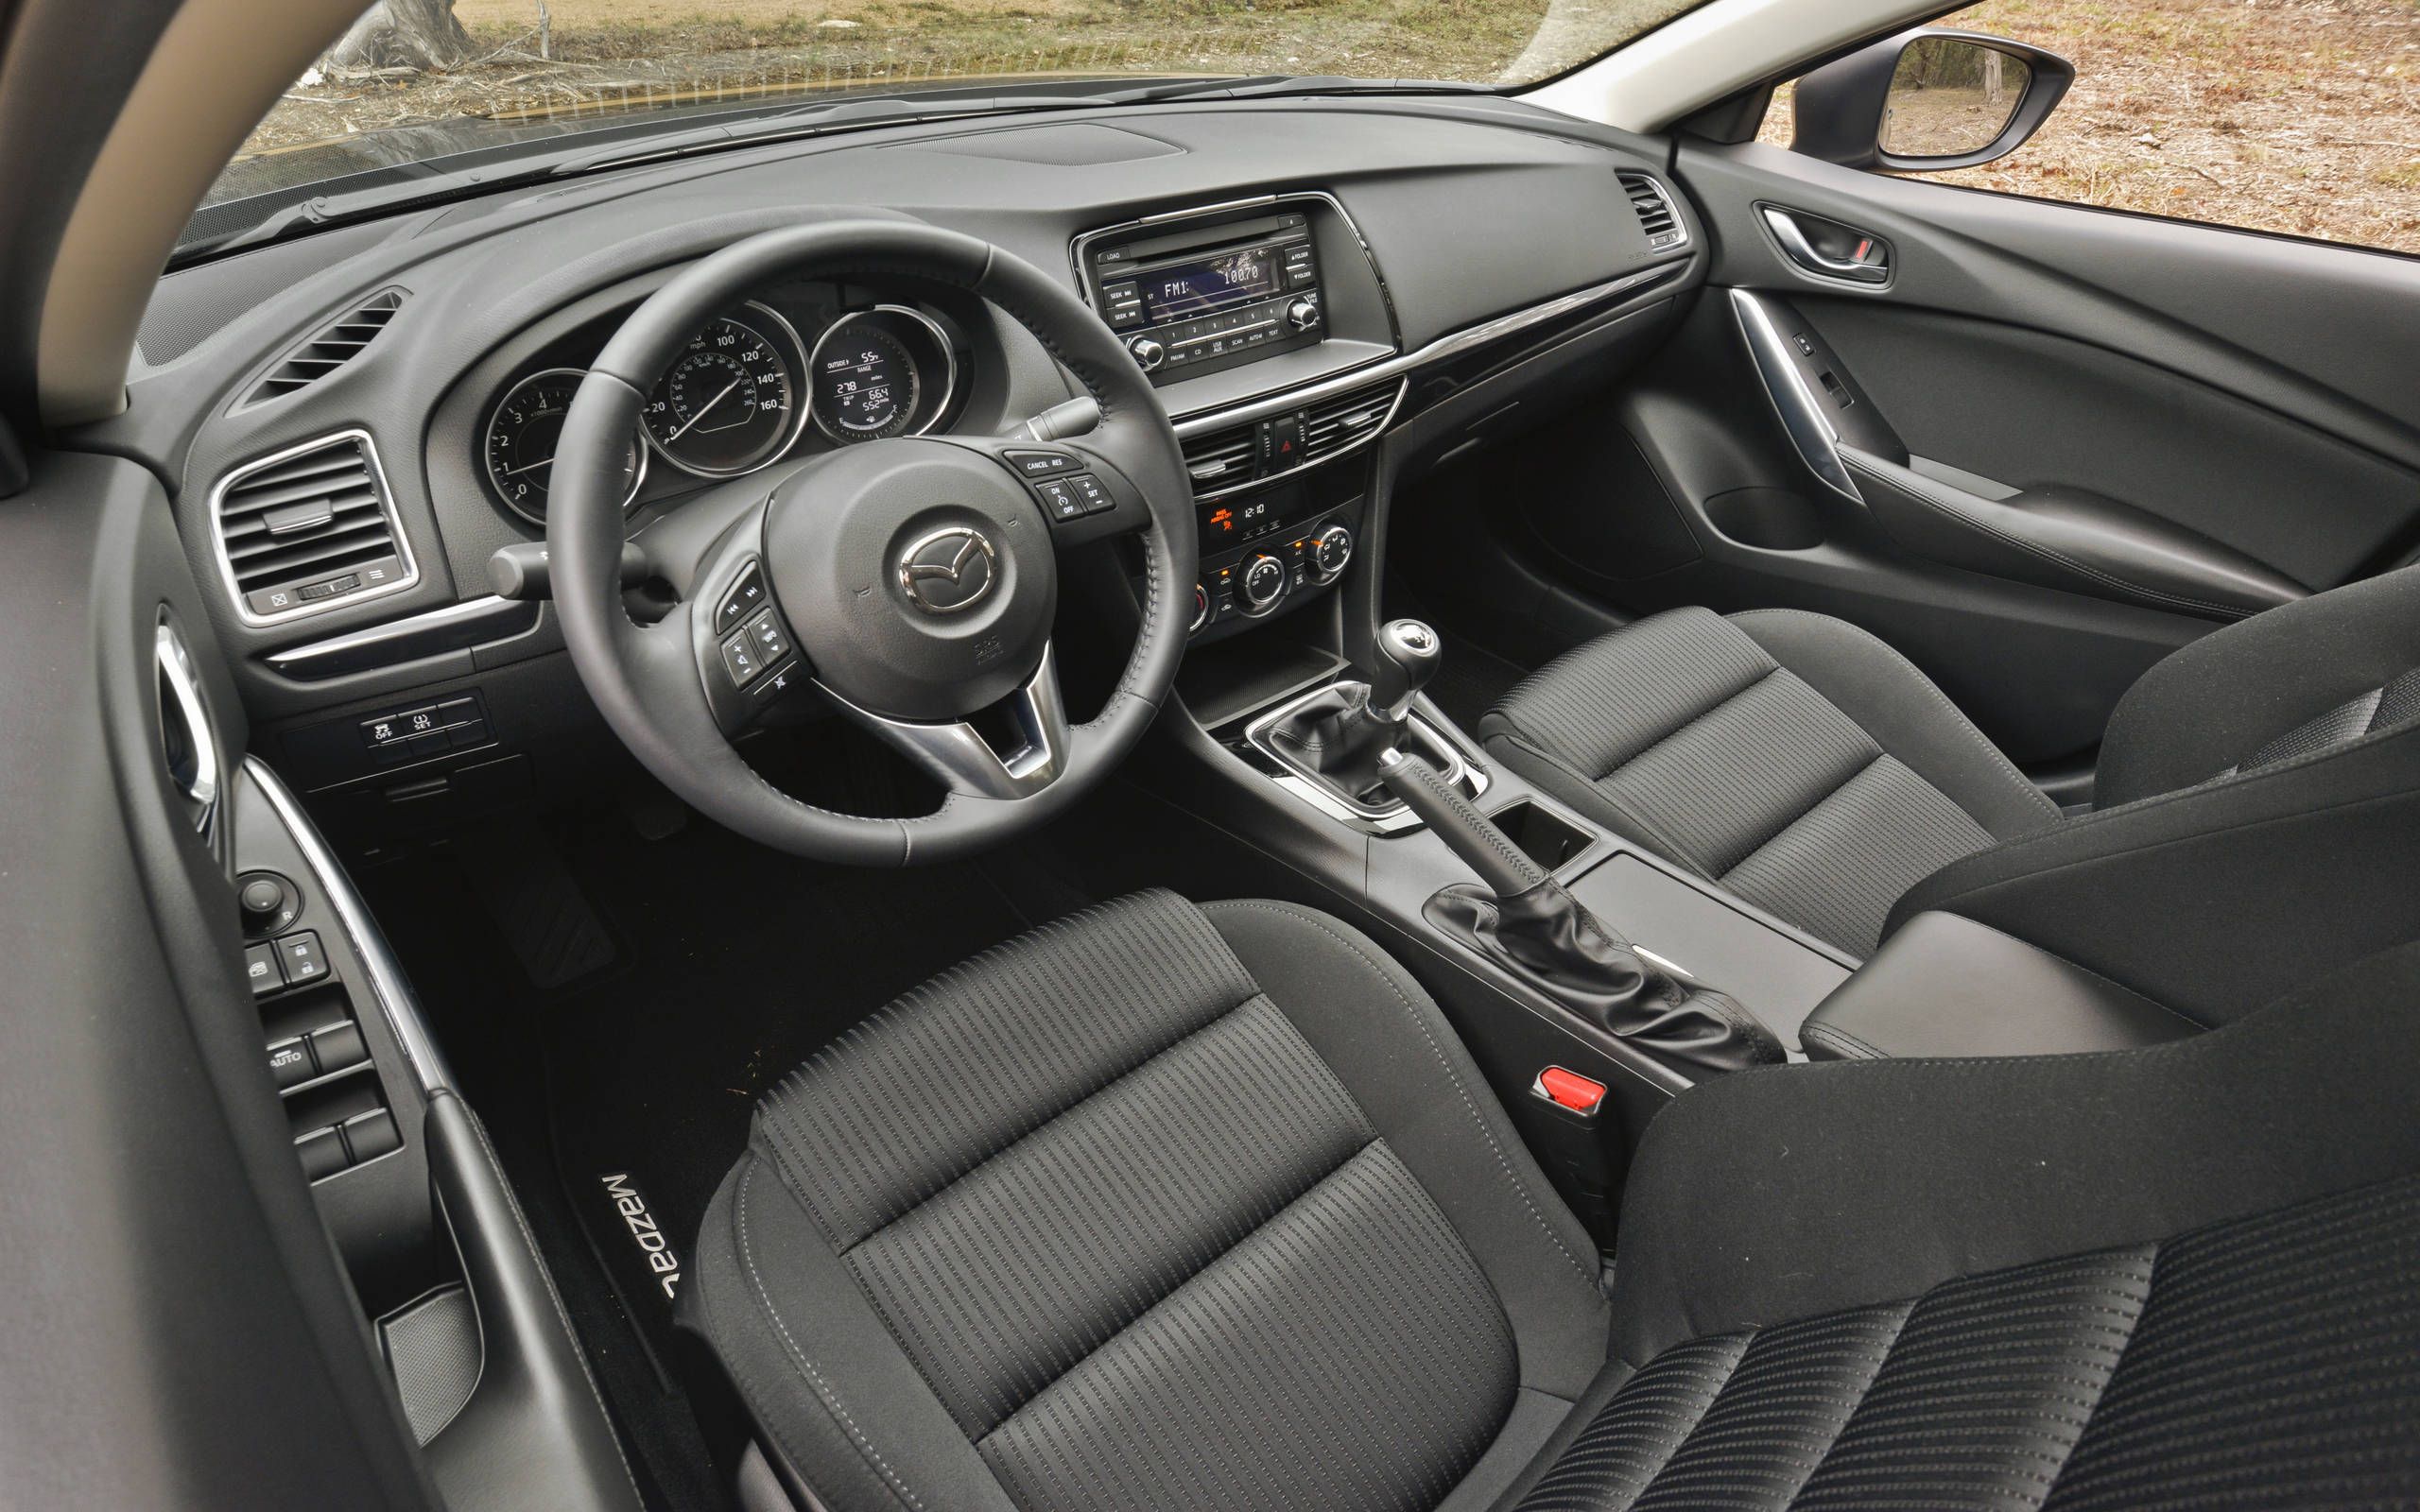 2015 Mazda 6 i Touring review notes